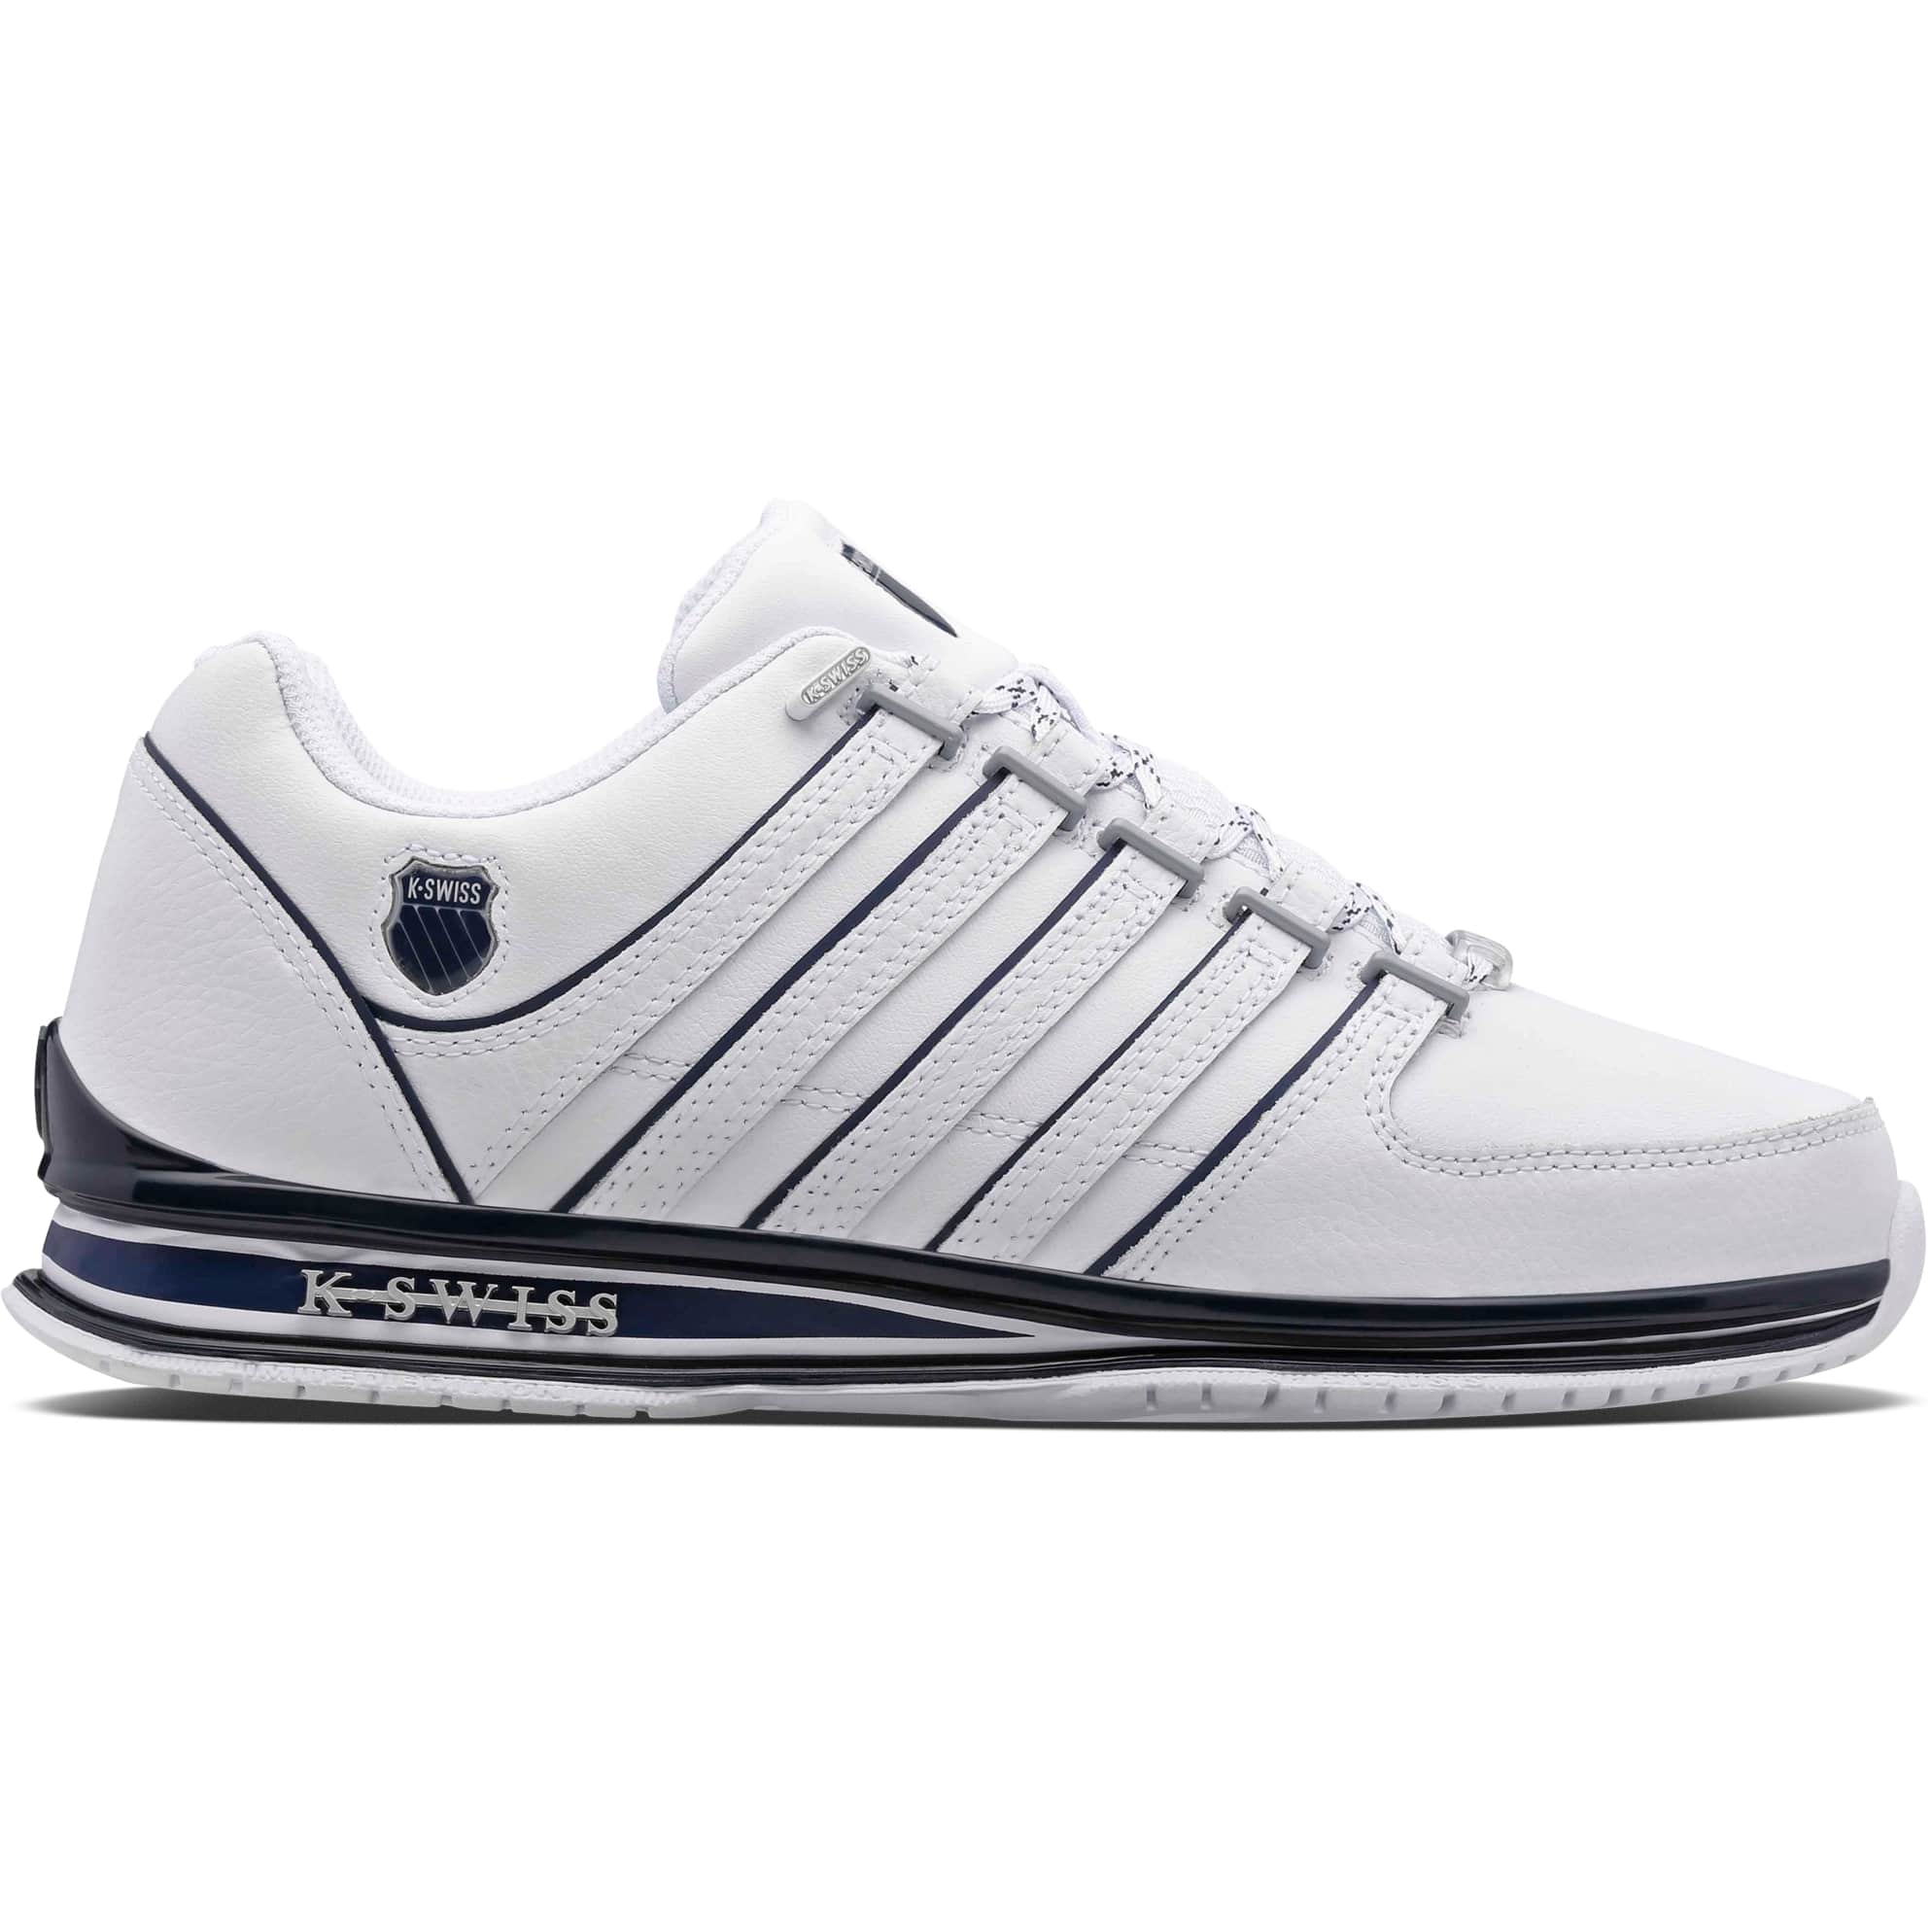 K-Swiss Mens Rinzler Trainers Shoes - UK 9 White 2951